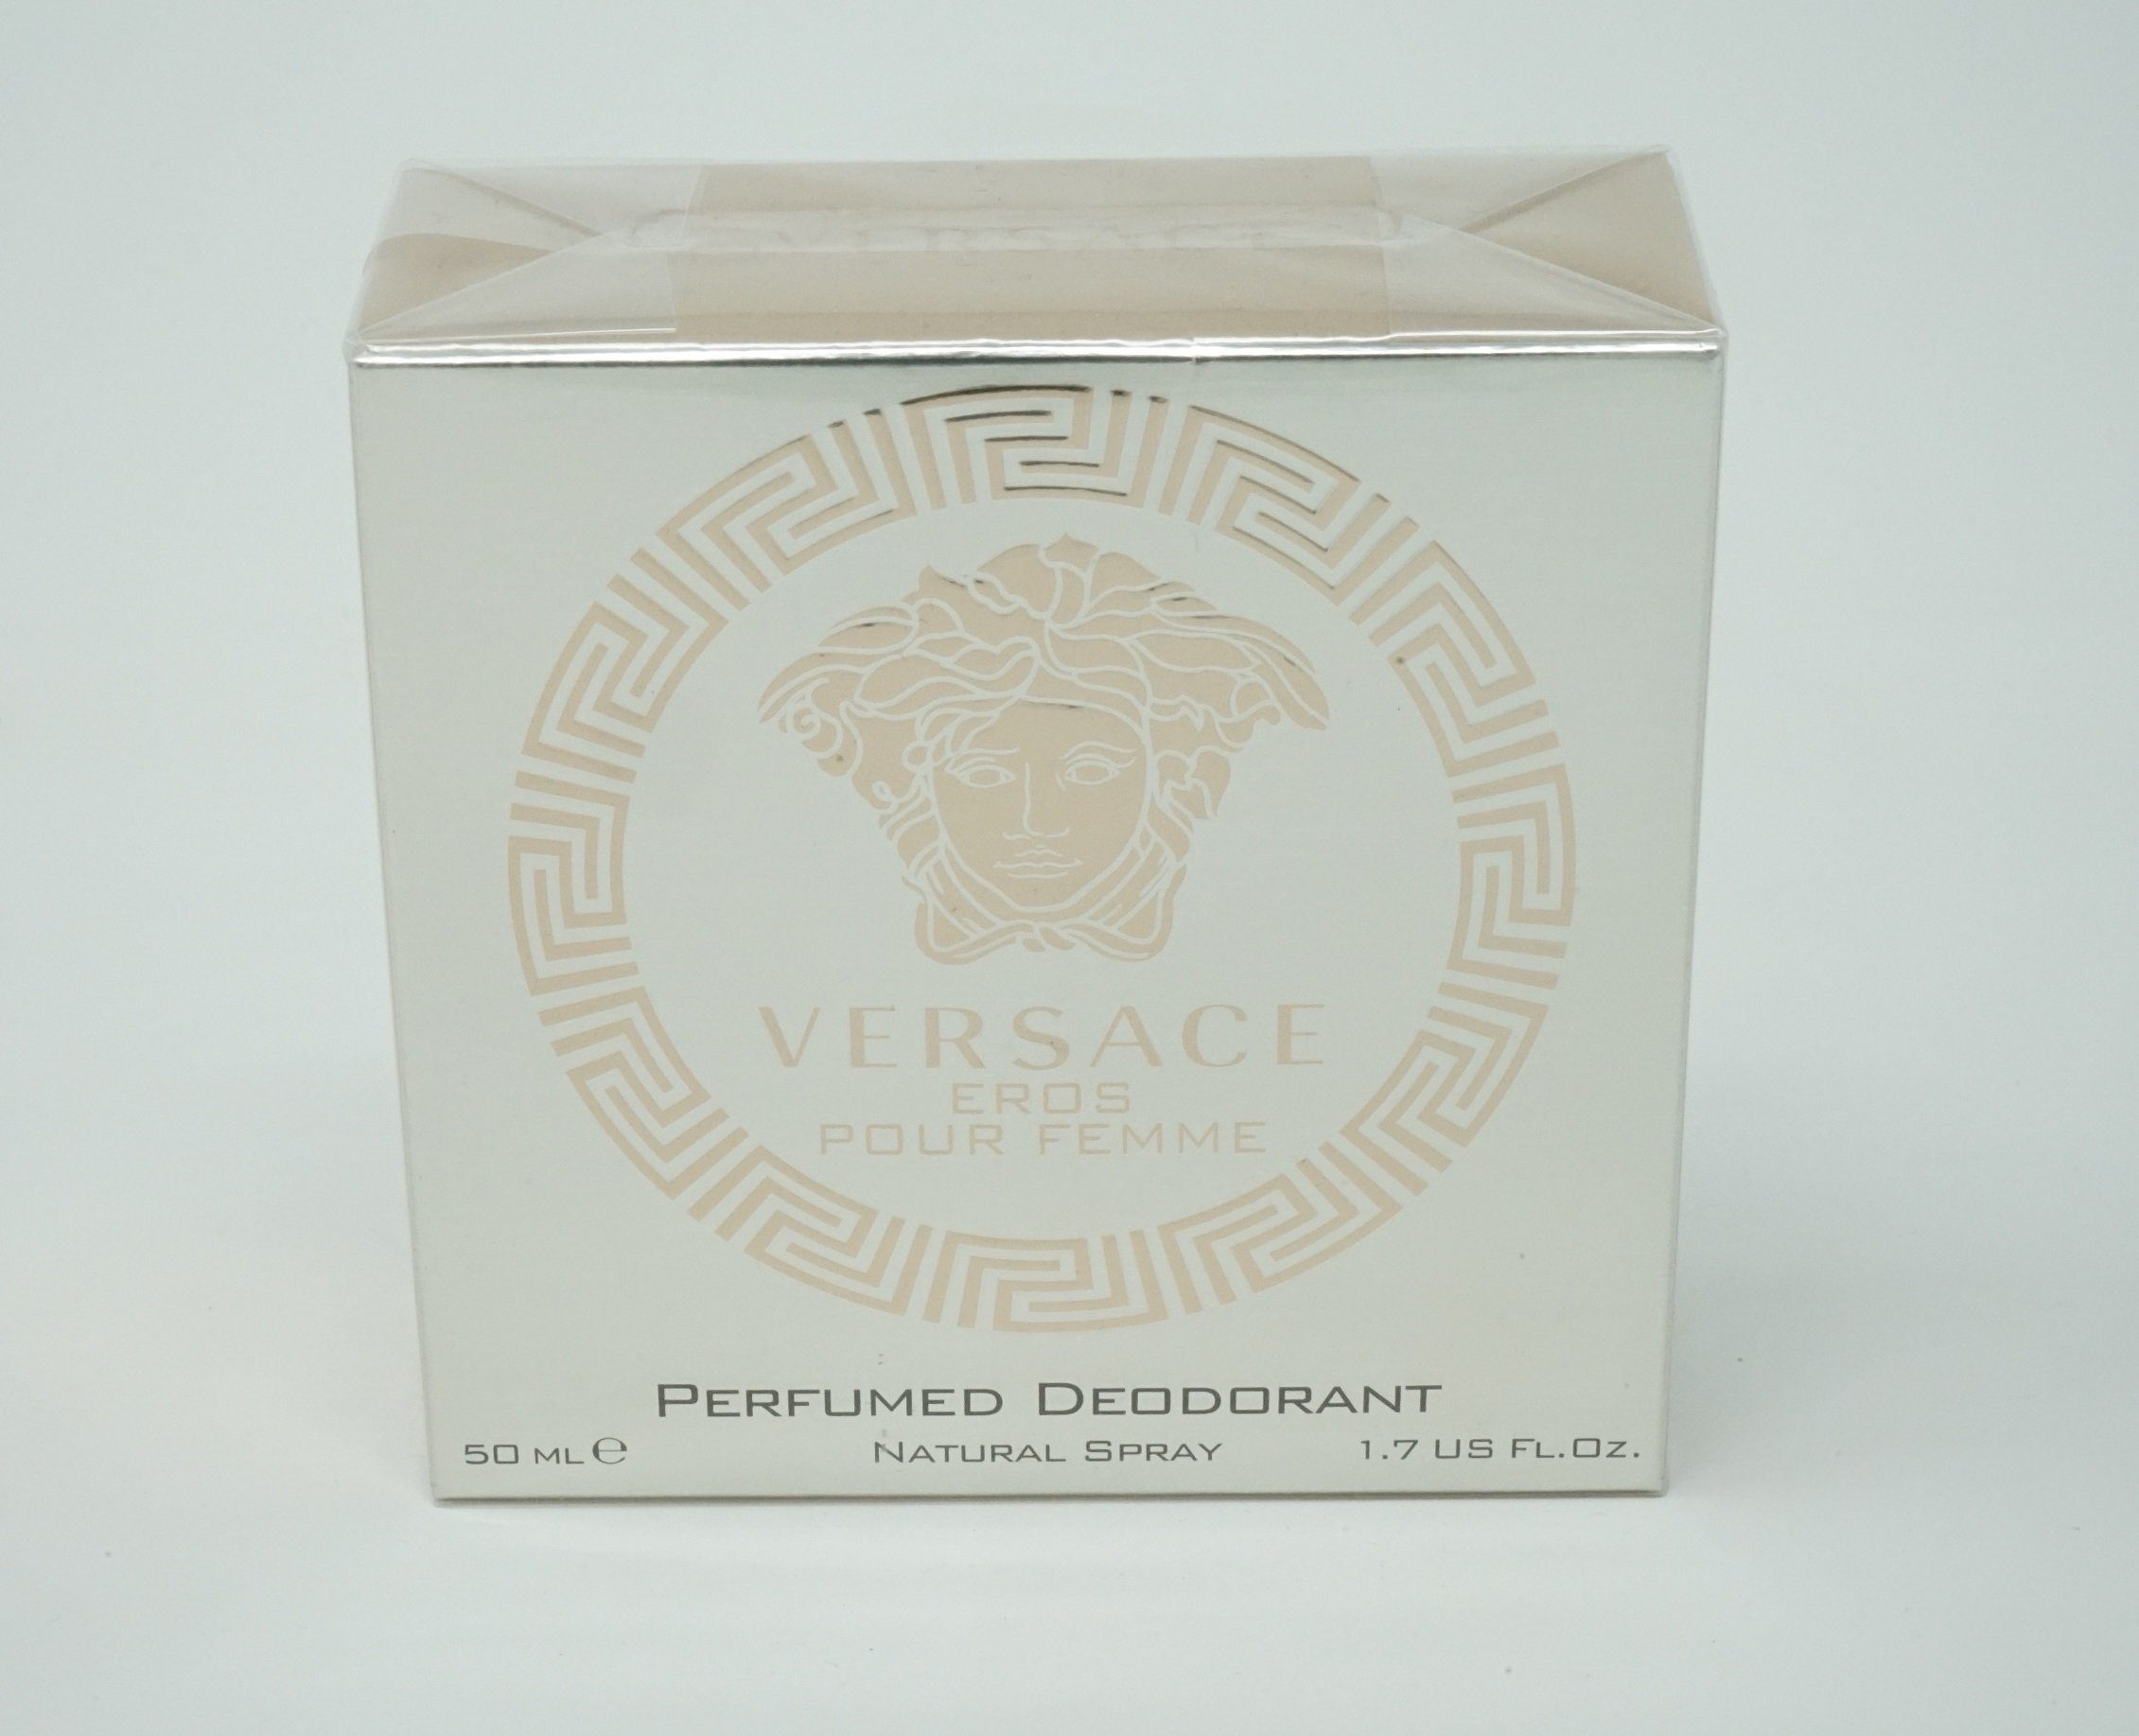 50ml Versace Deo / Spray de Versace Spray Deodorant Toilette Eros Femme Eau Pour